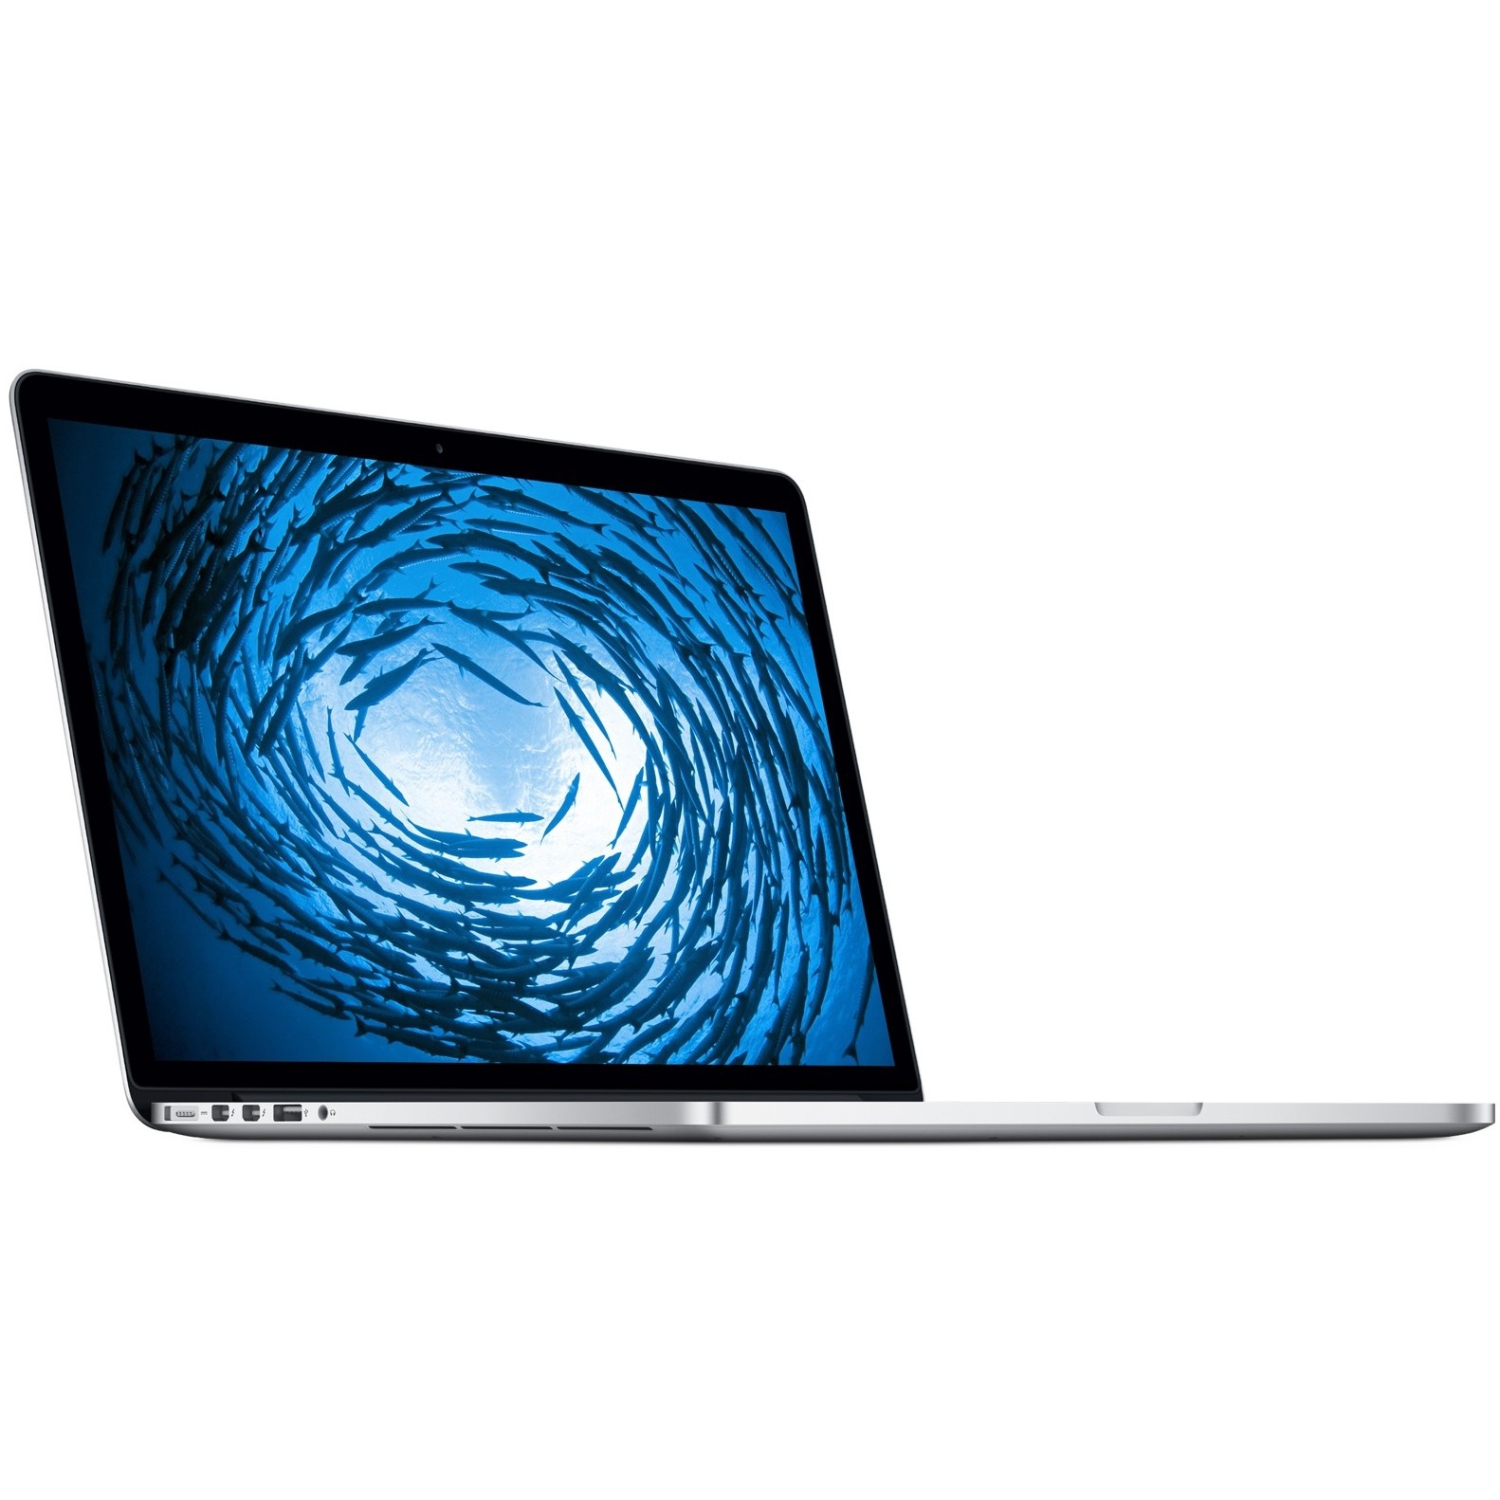 Refurbished (Excellent) - Apple MacBook Pro 15" Retina - 2.5GHz Intel Core i7 / 16GB / 512GB SSD - 2015 Model -Grade A (9/10)